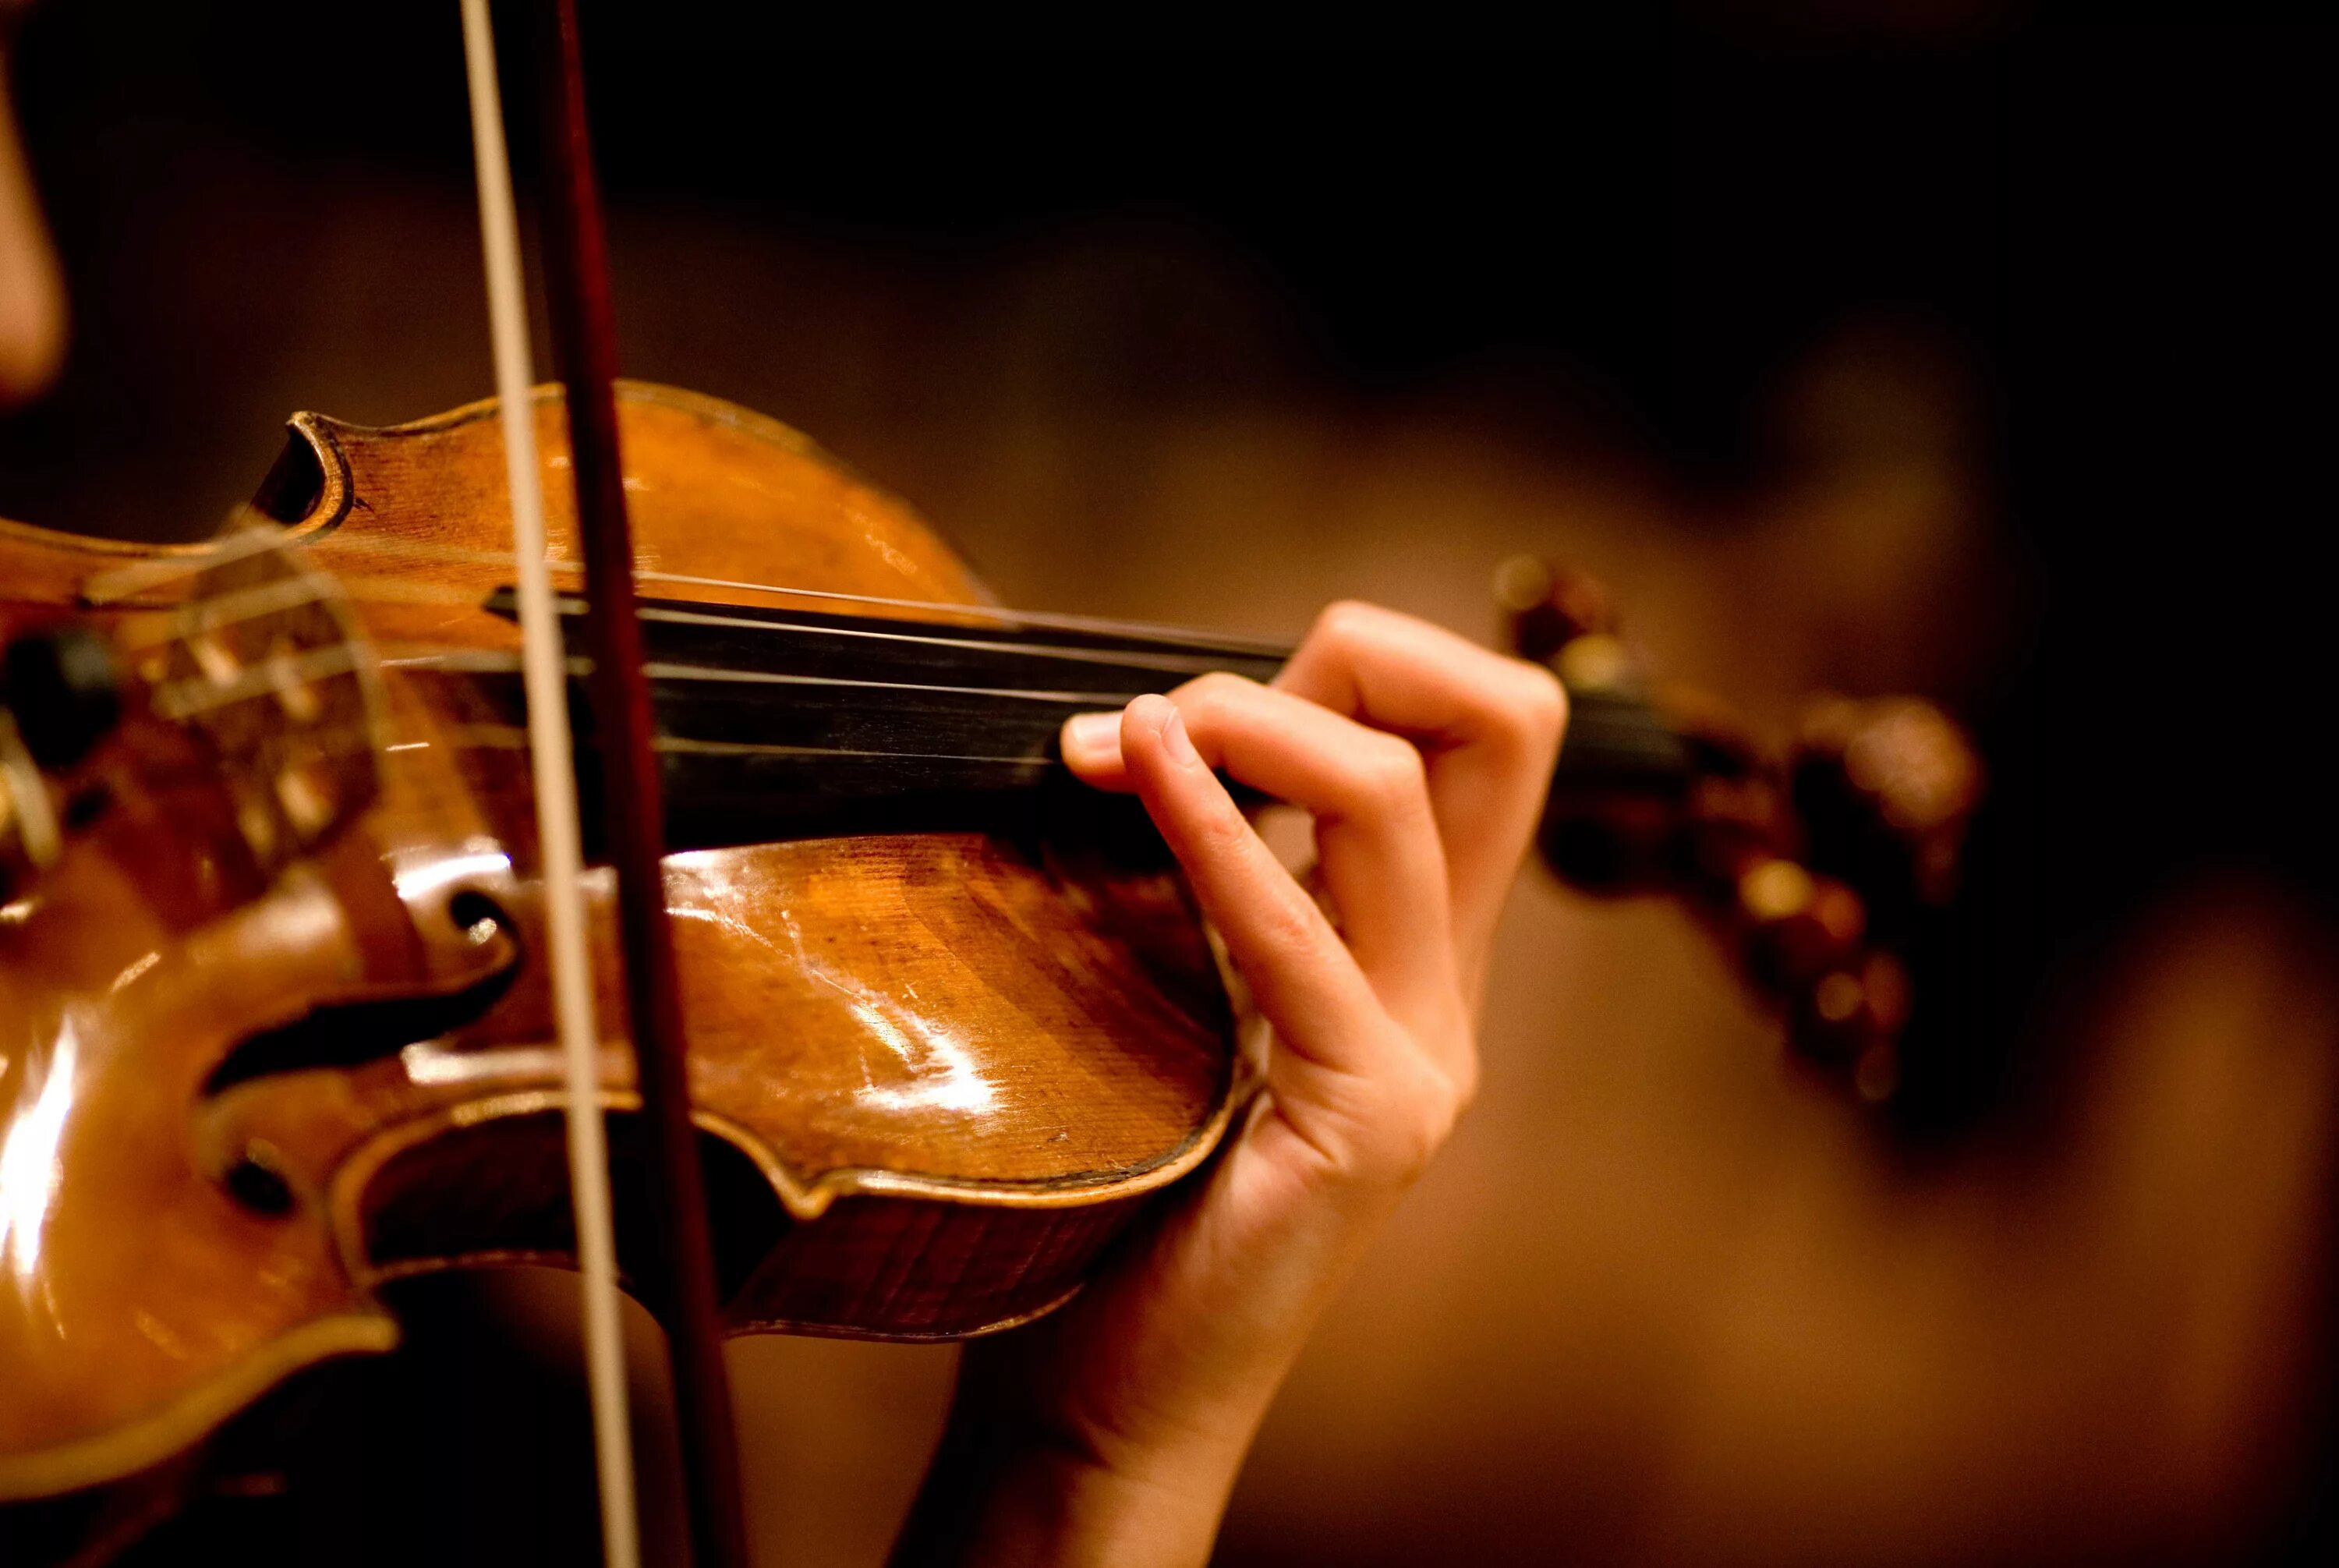 You like classical music. Скрипка. Скрипка картинка. Красивая скрипка. Скрипка в руках скрипача.